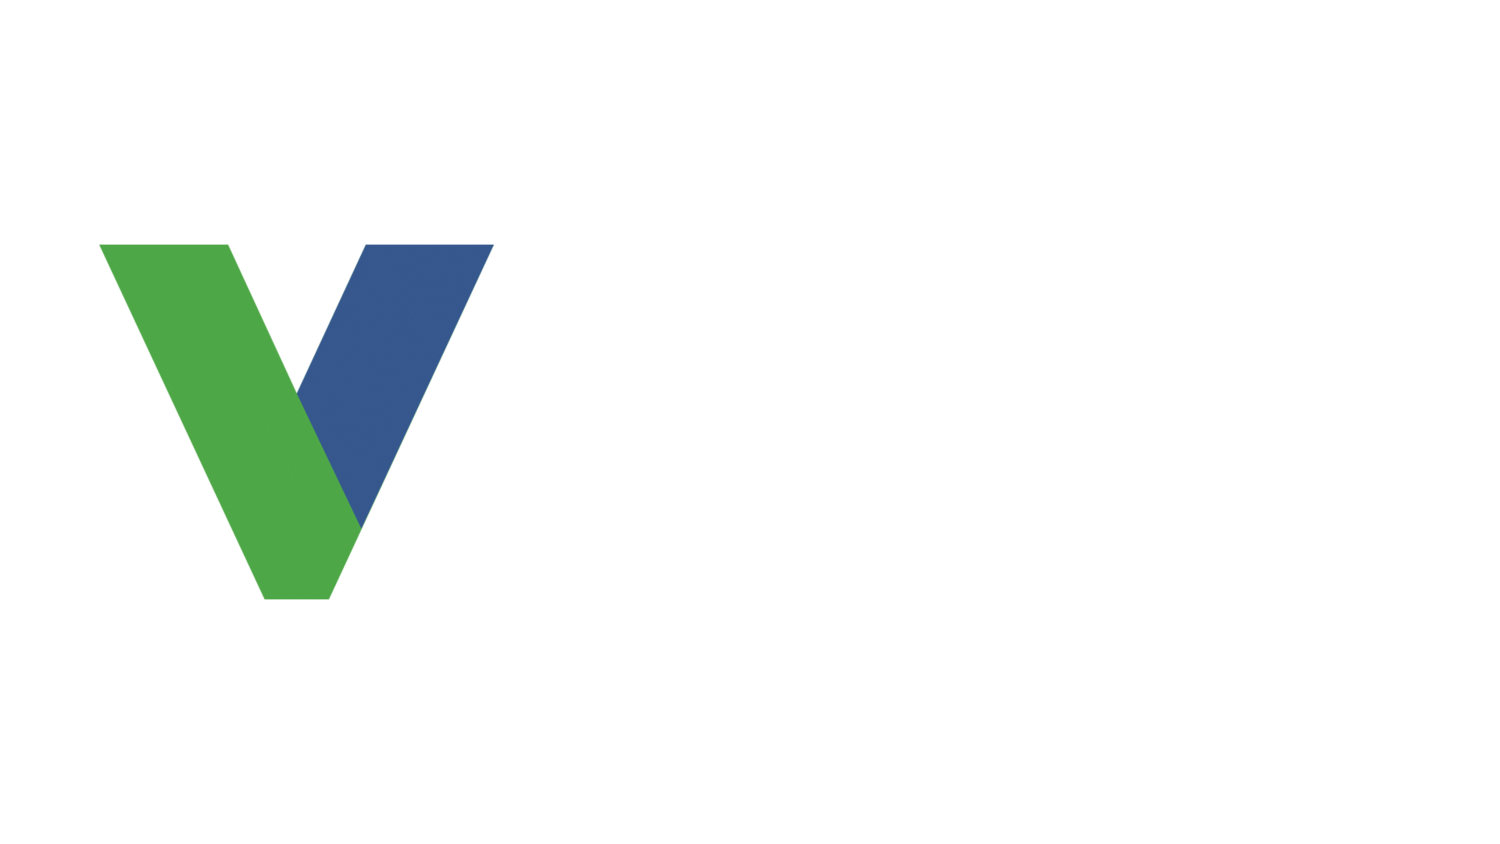 VILLAGE CHURCH